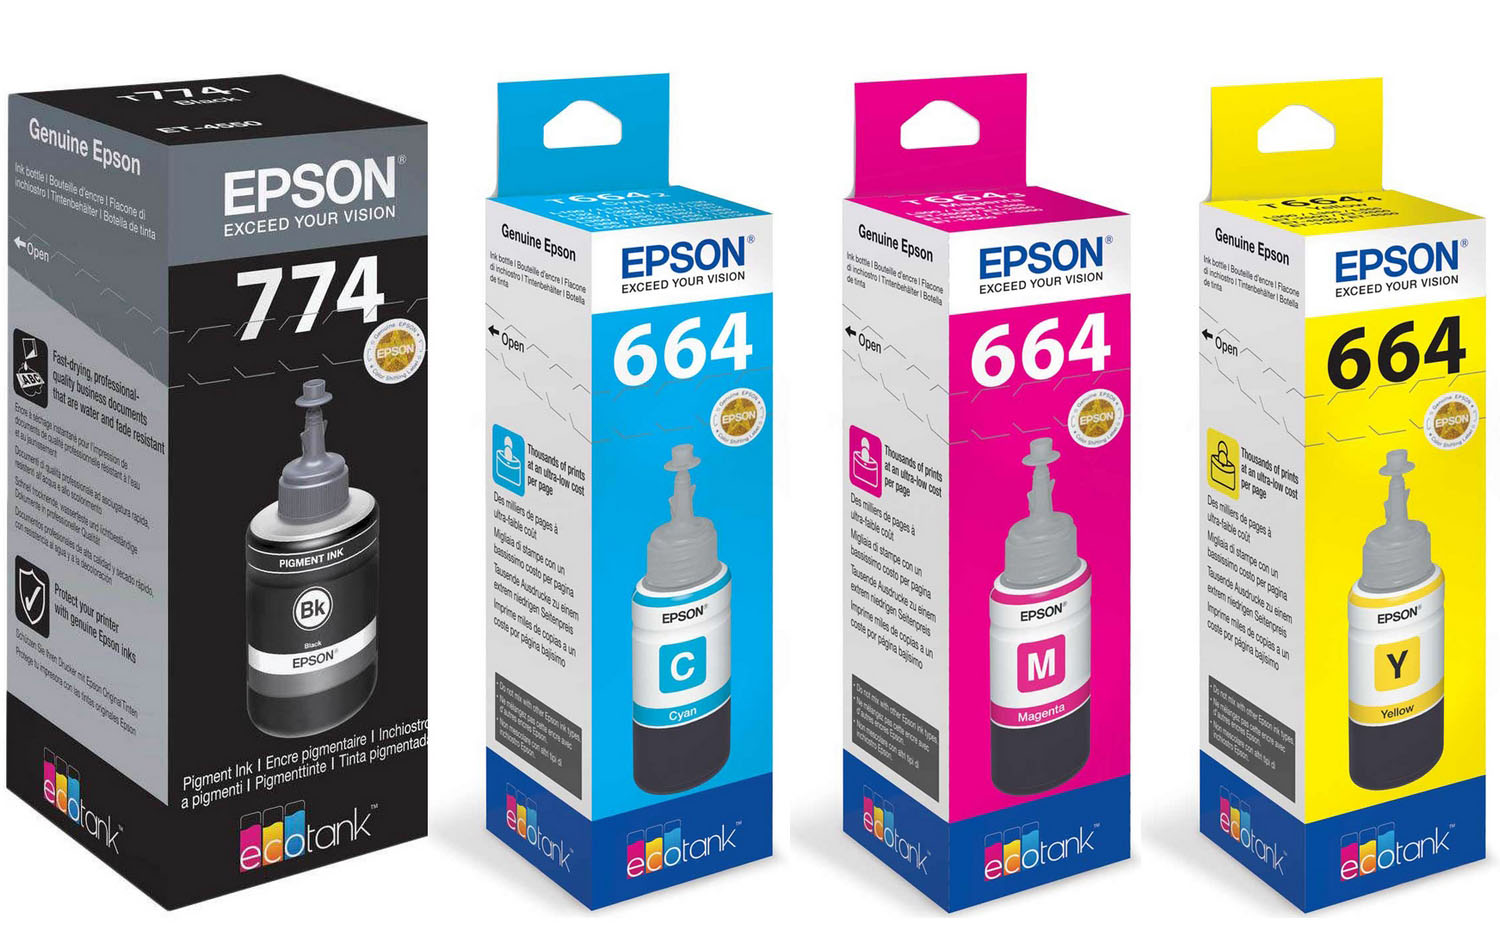 mực in chính hãng: Epson T7741, T6642, T6643, T6644